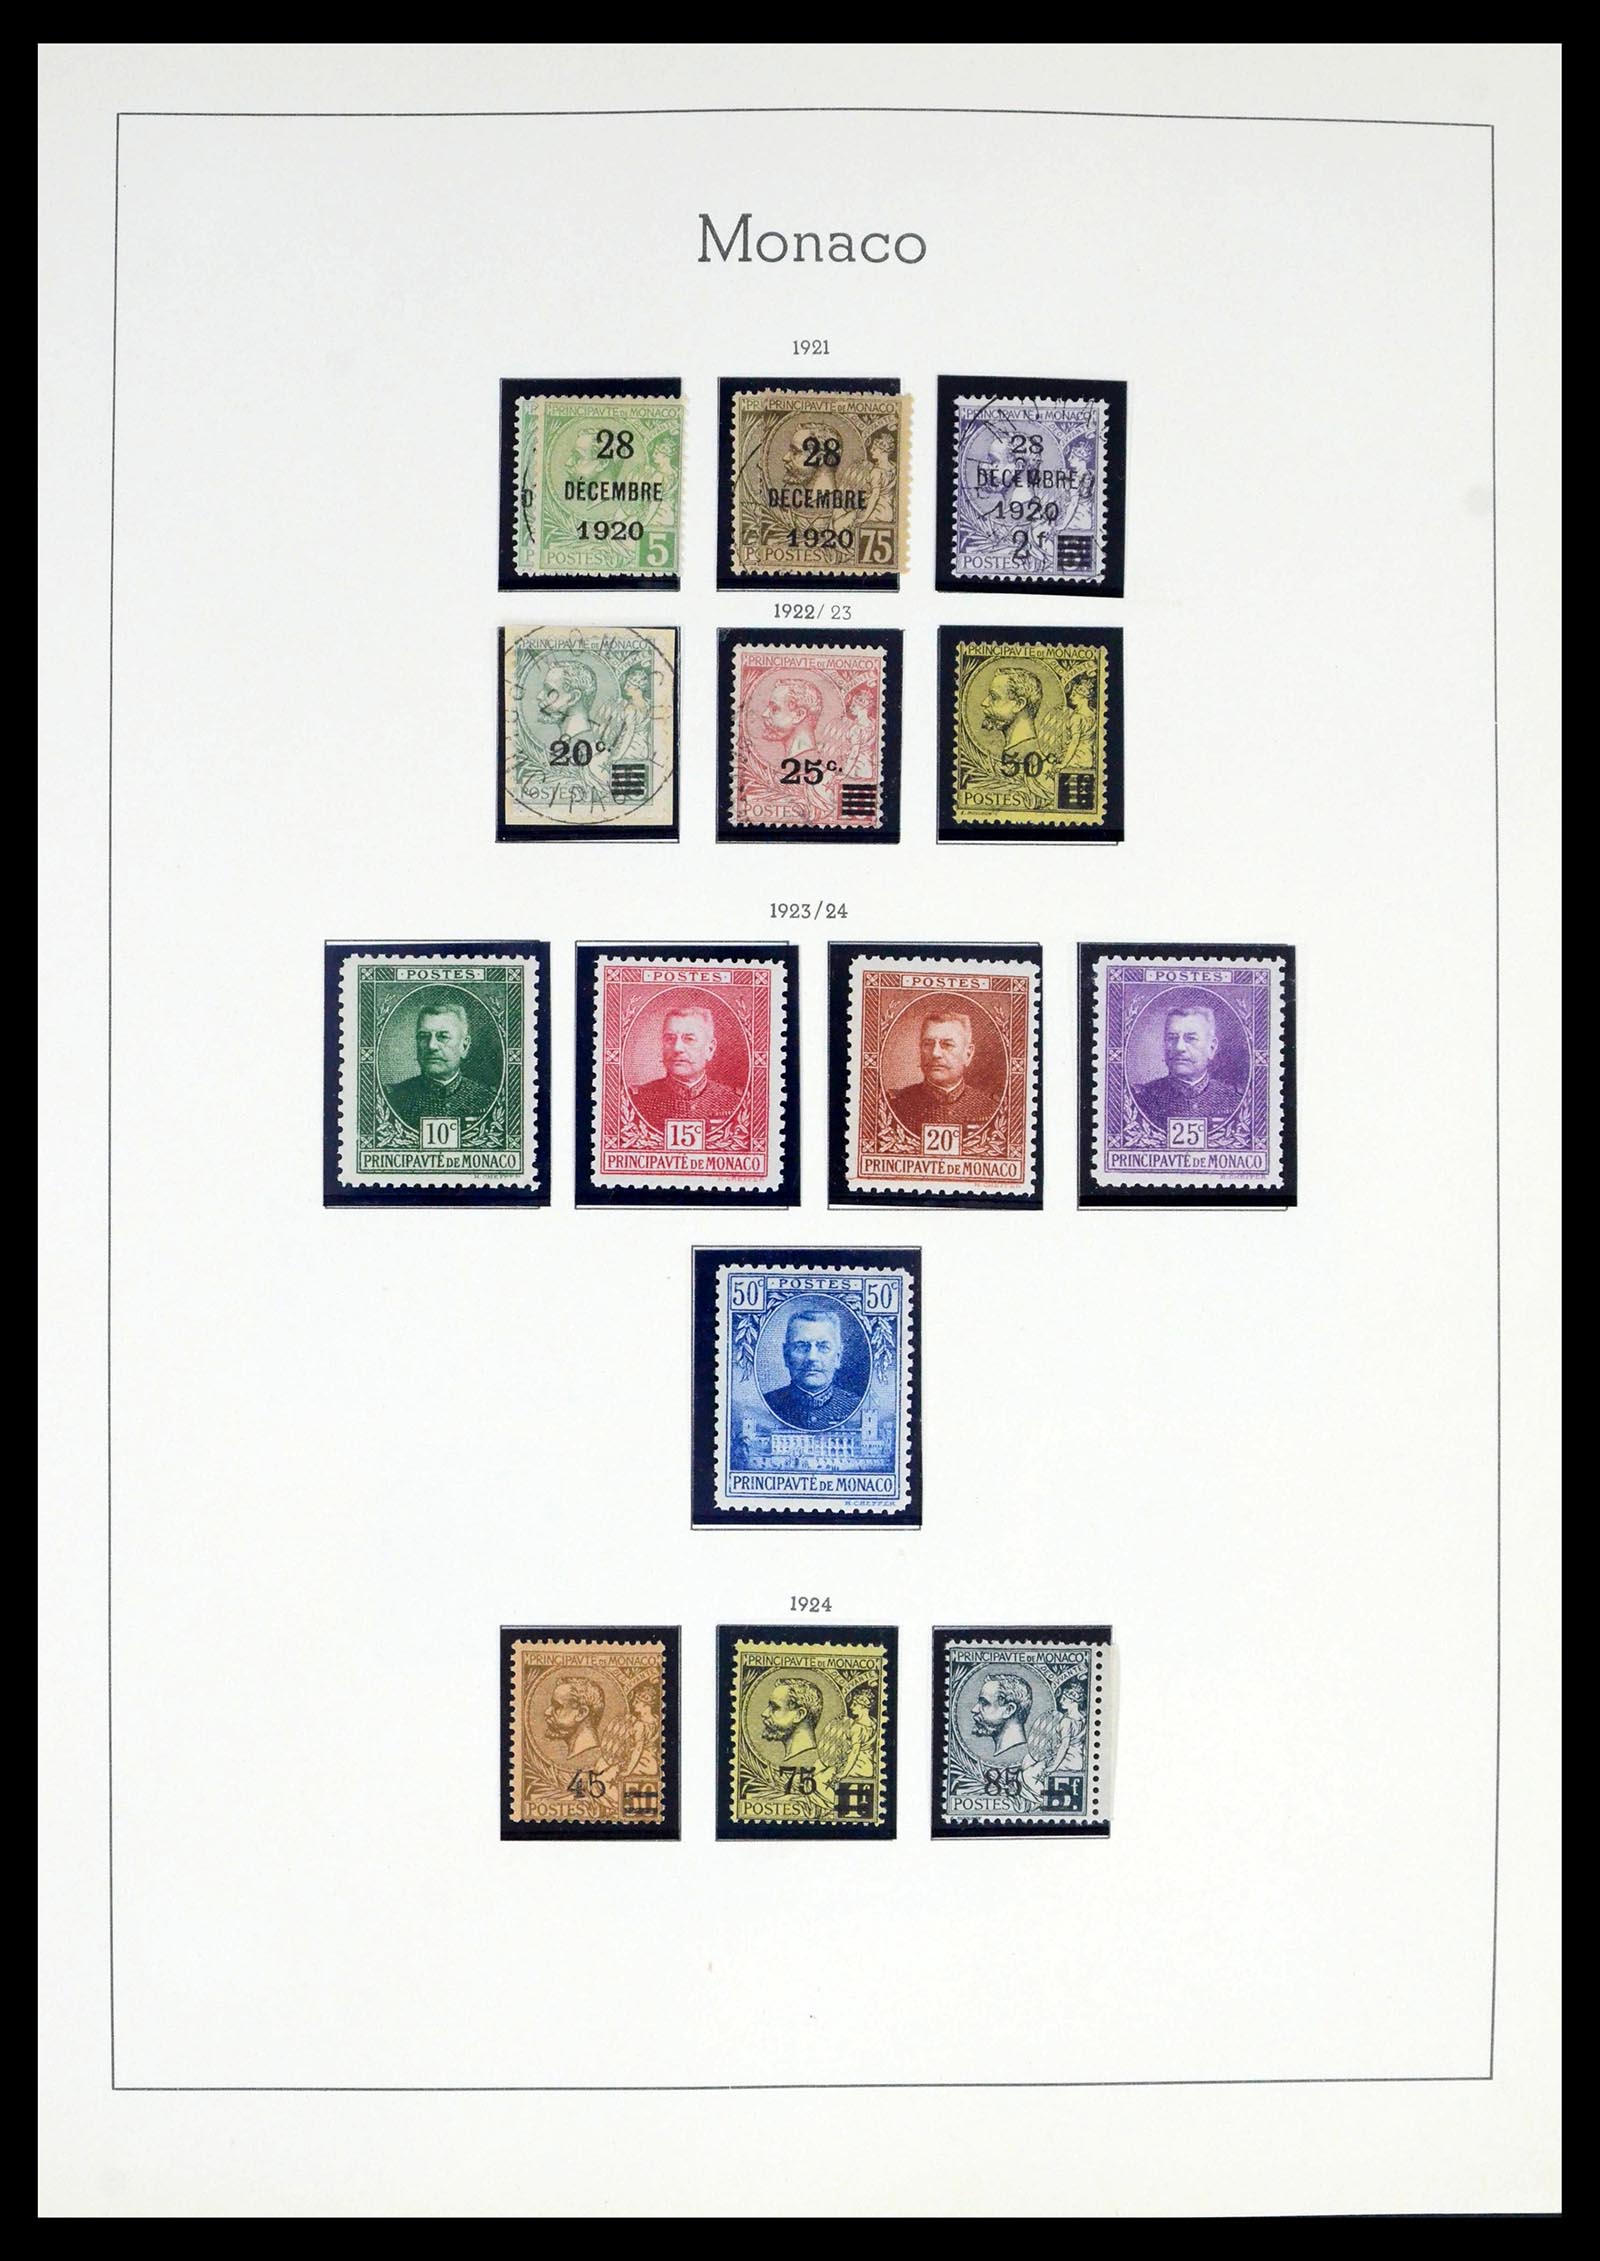 39392 0005 - Stamp collection 39392 Monaco 1885-1999.